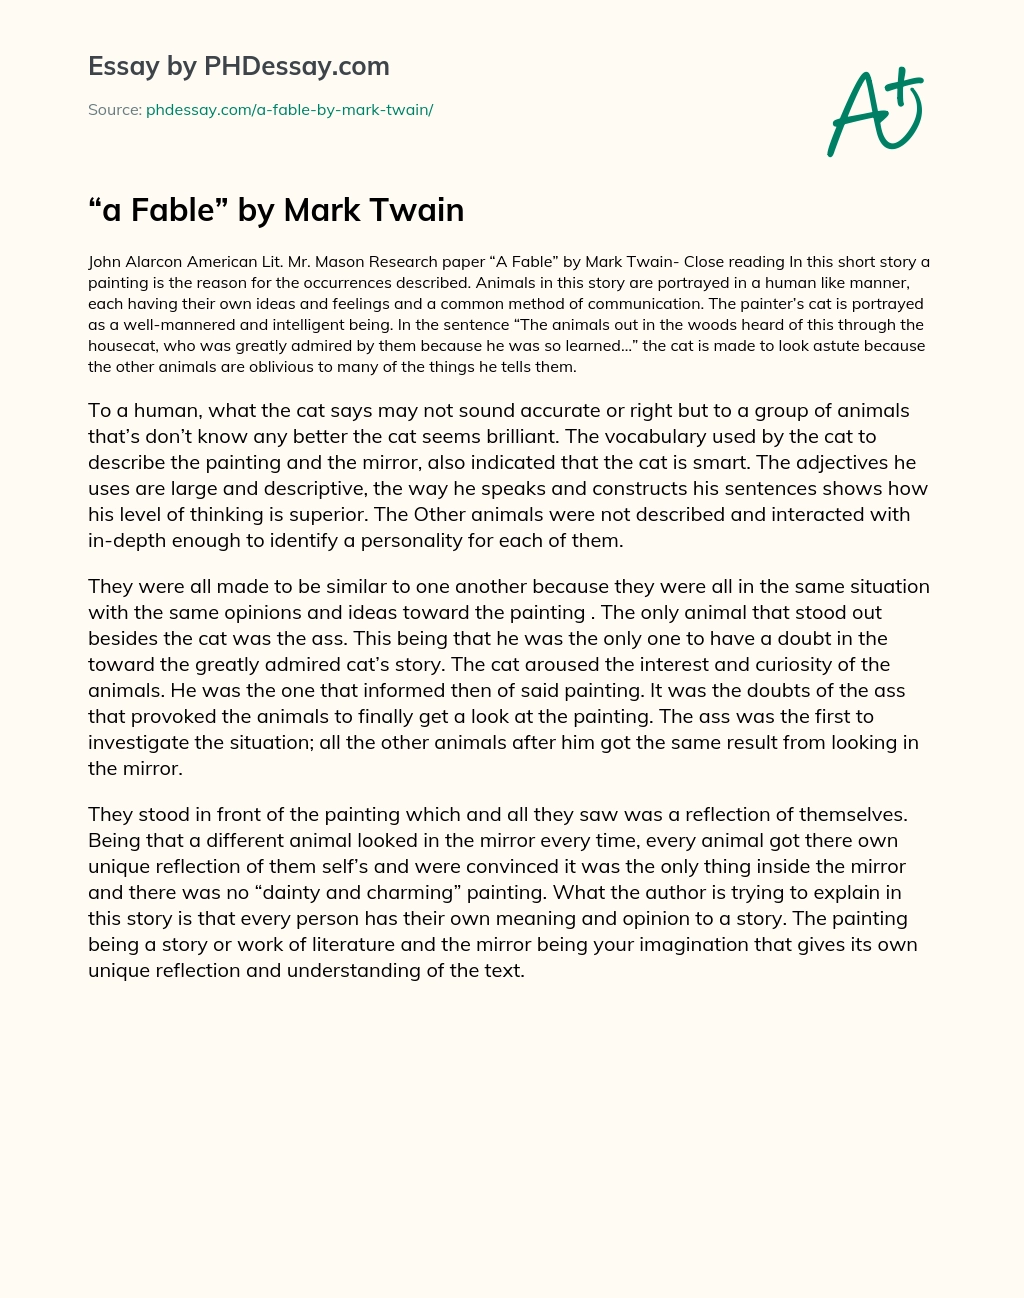 A Fable by Mark Twain essay